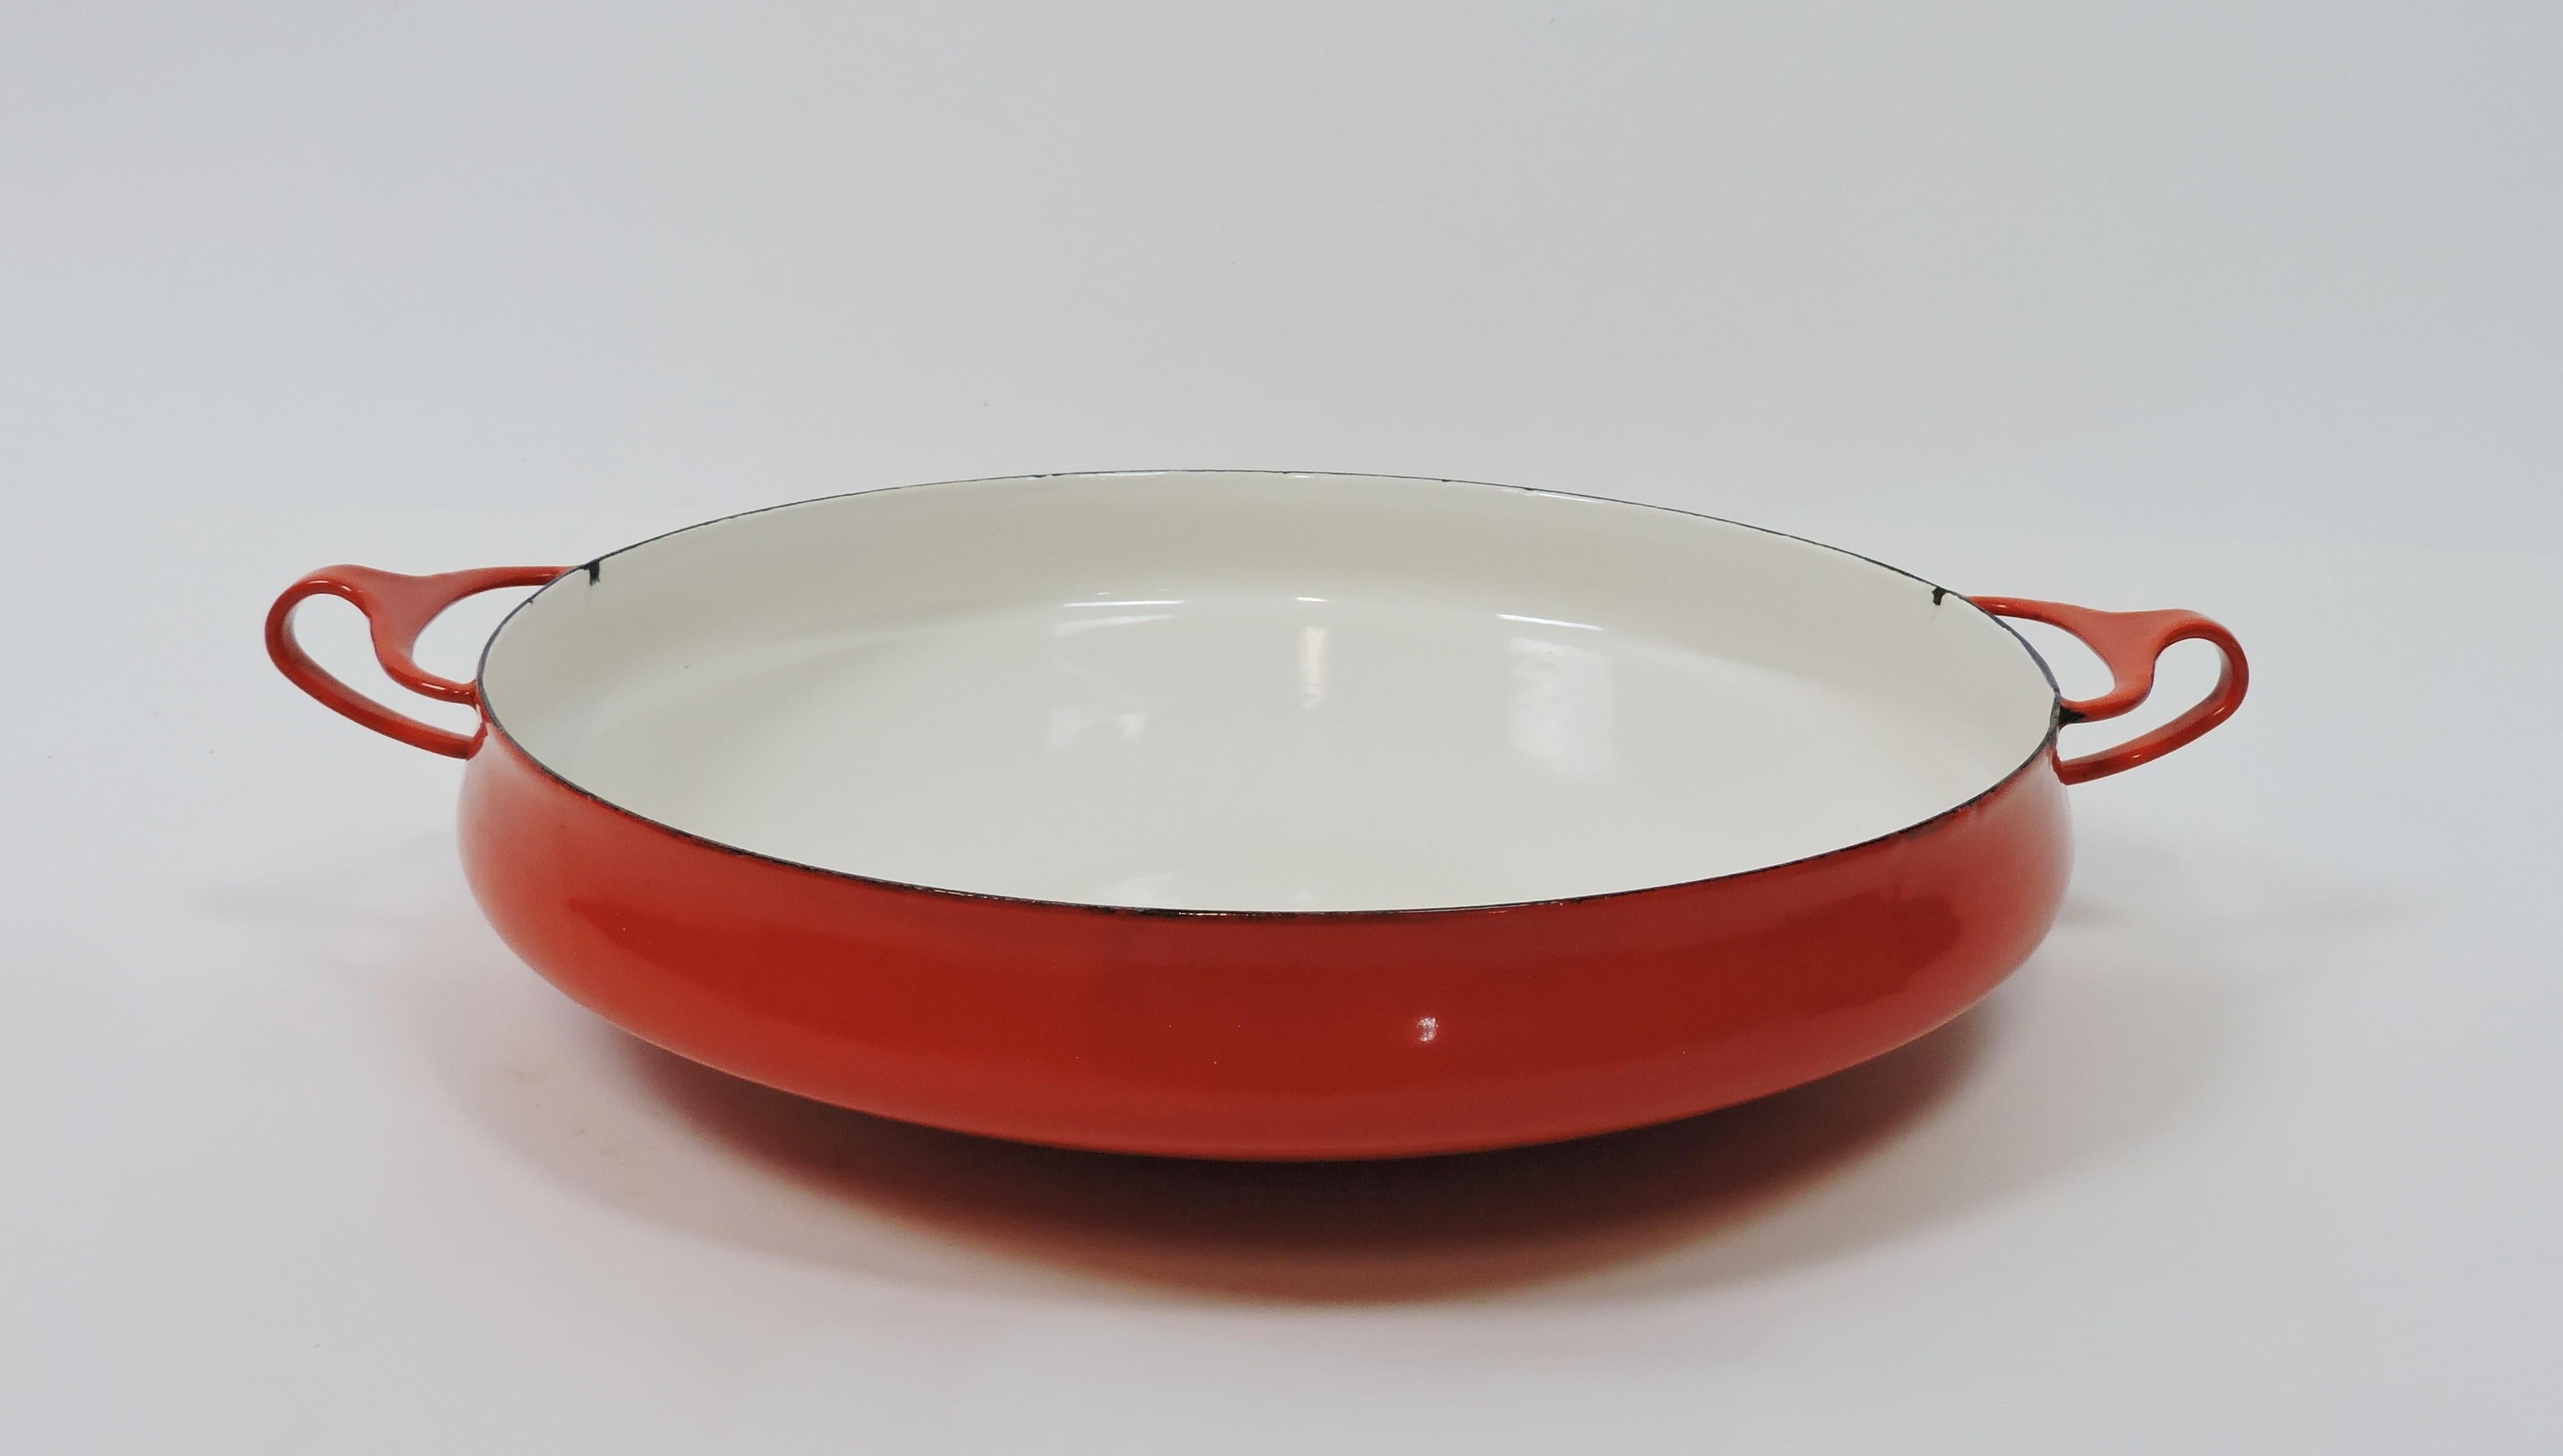 Mid-20th Century Jens Quistgaard Dansk Kobenstyle Red Enamel Paella Pan Made in Denmark